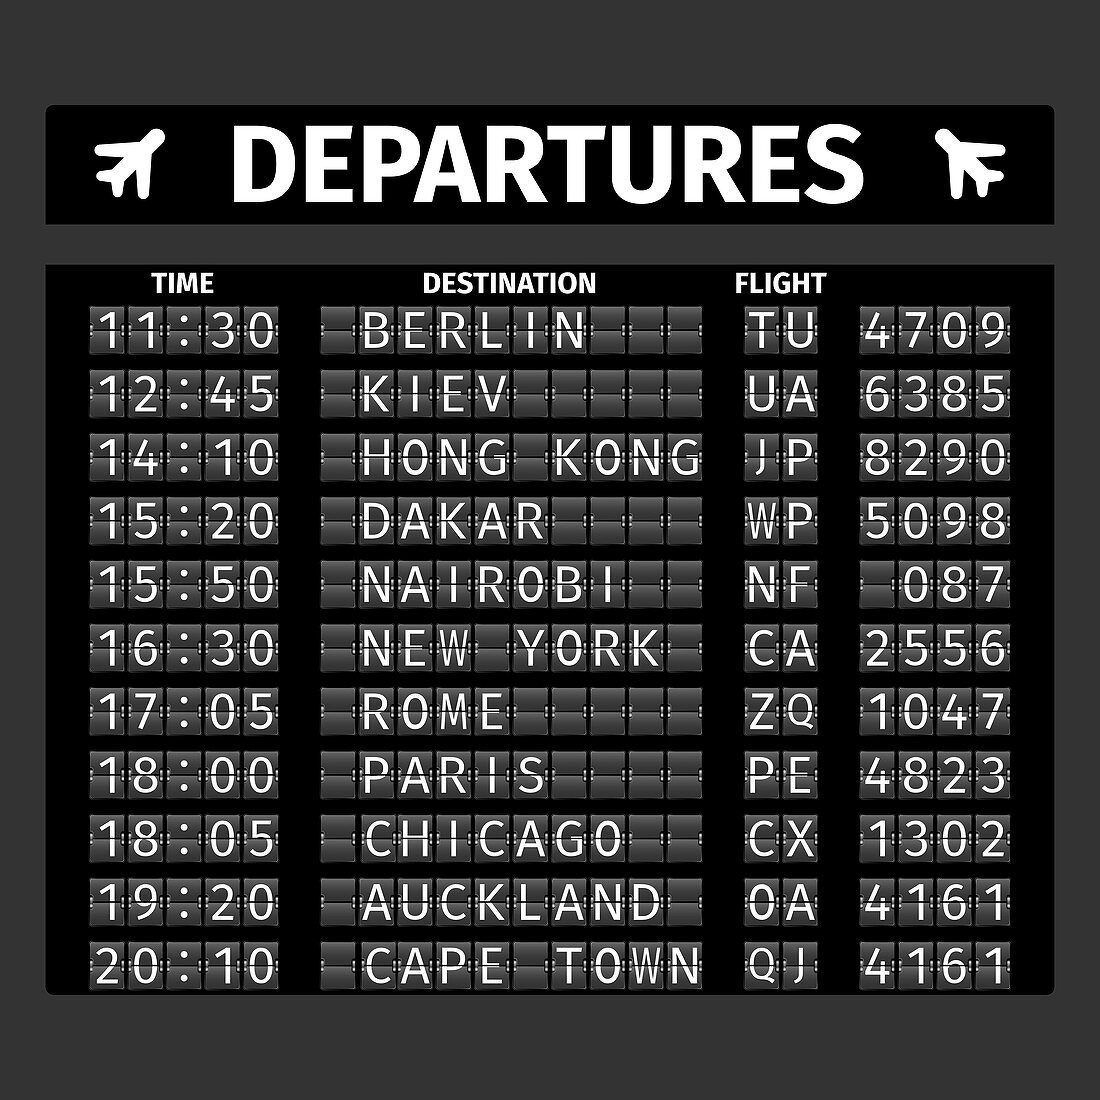 Airport departure board, illustration